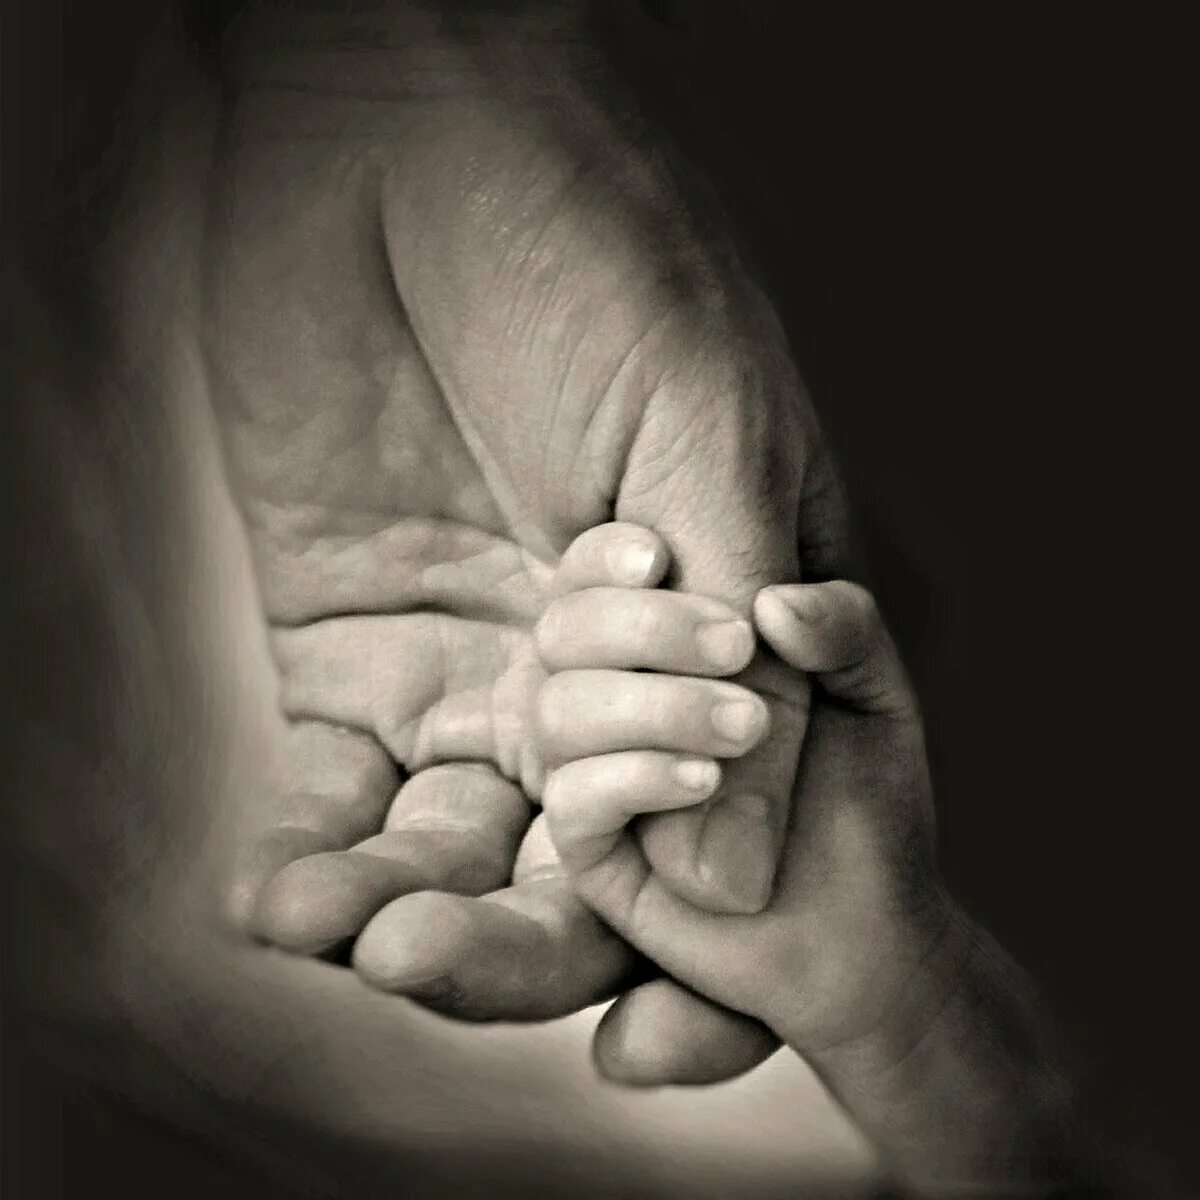 Руки отца песня. Руки отца. Детская рука в руке. Мужская и детская рука. Рука отца и сына.